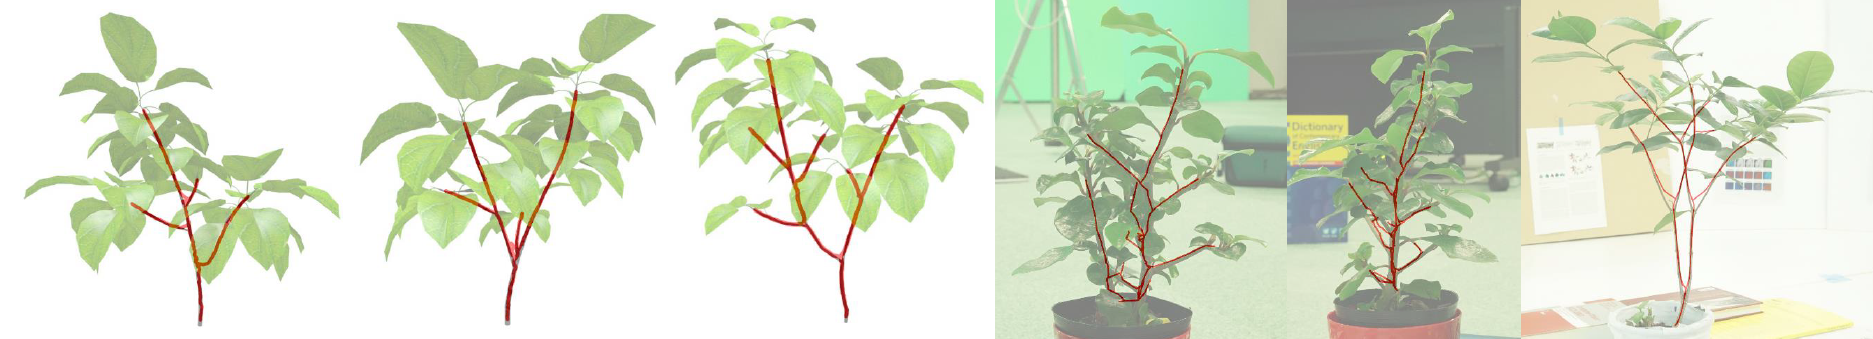 Probabilistic Plant Modeling via Multi-View Image-to-Image Translation